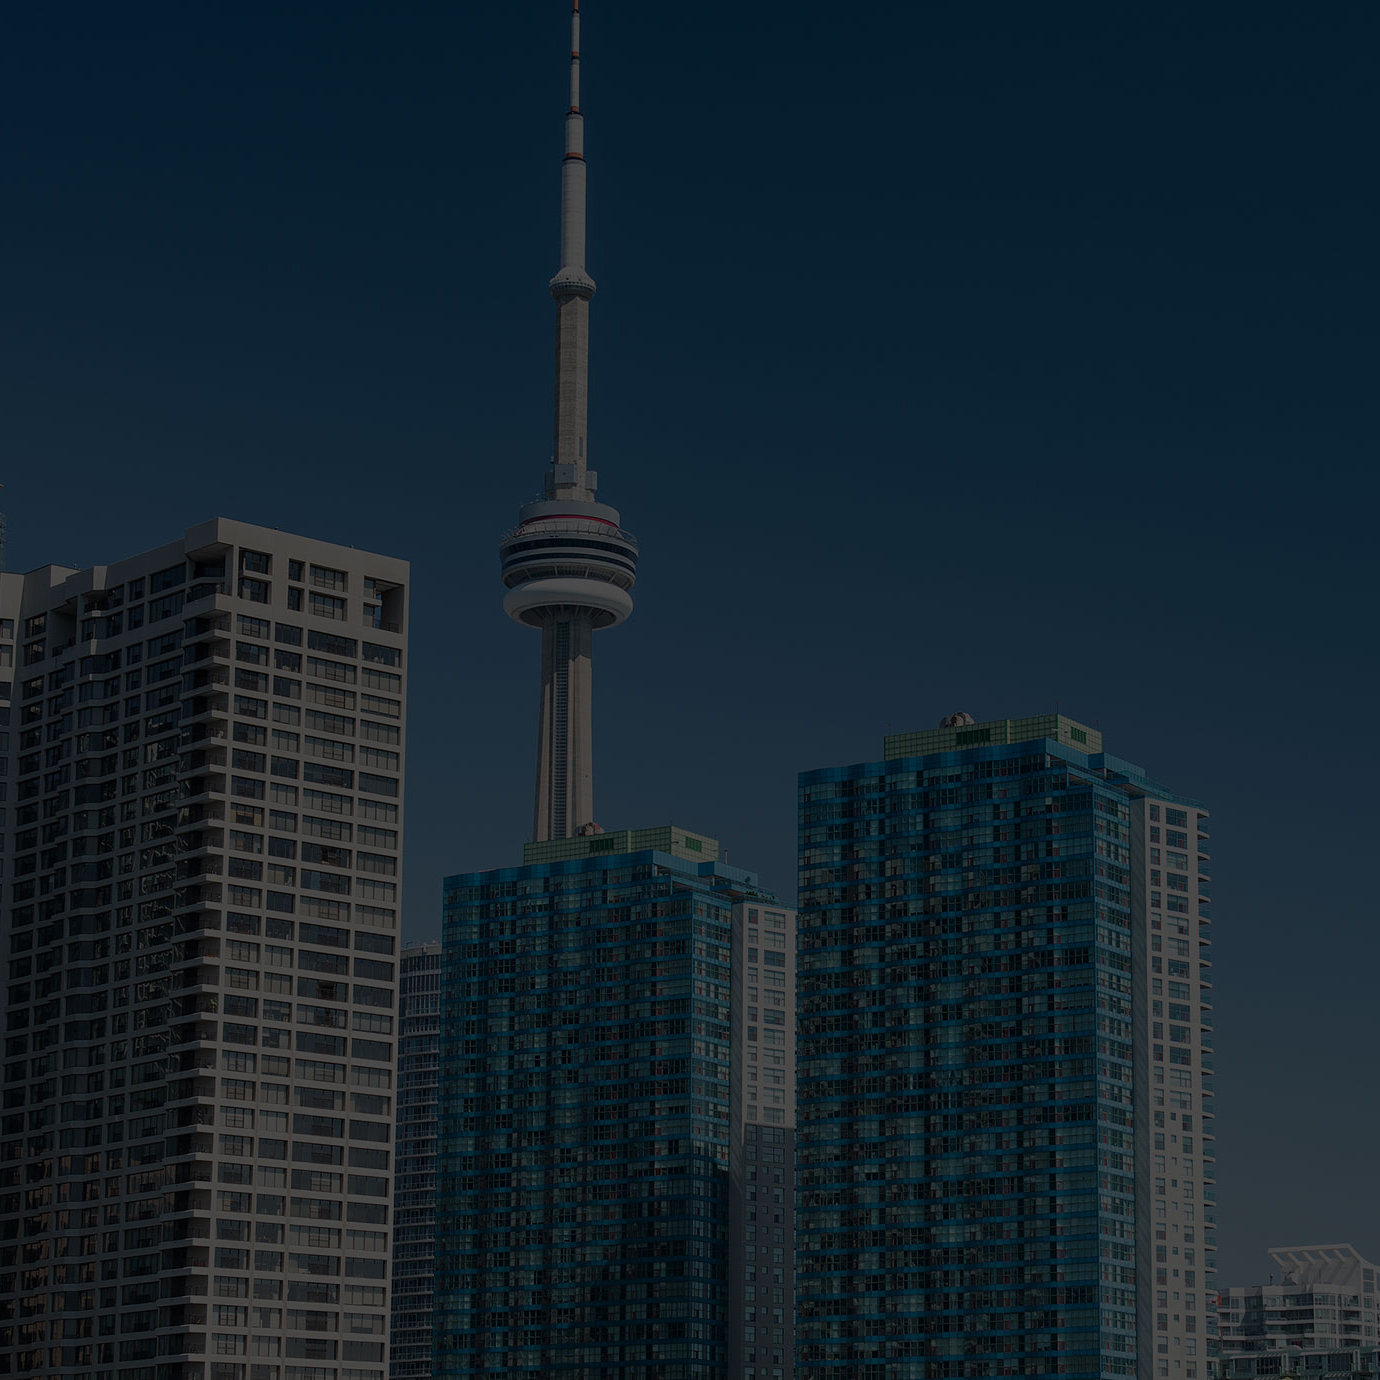 Toronto Tower and the condo buildings around it